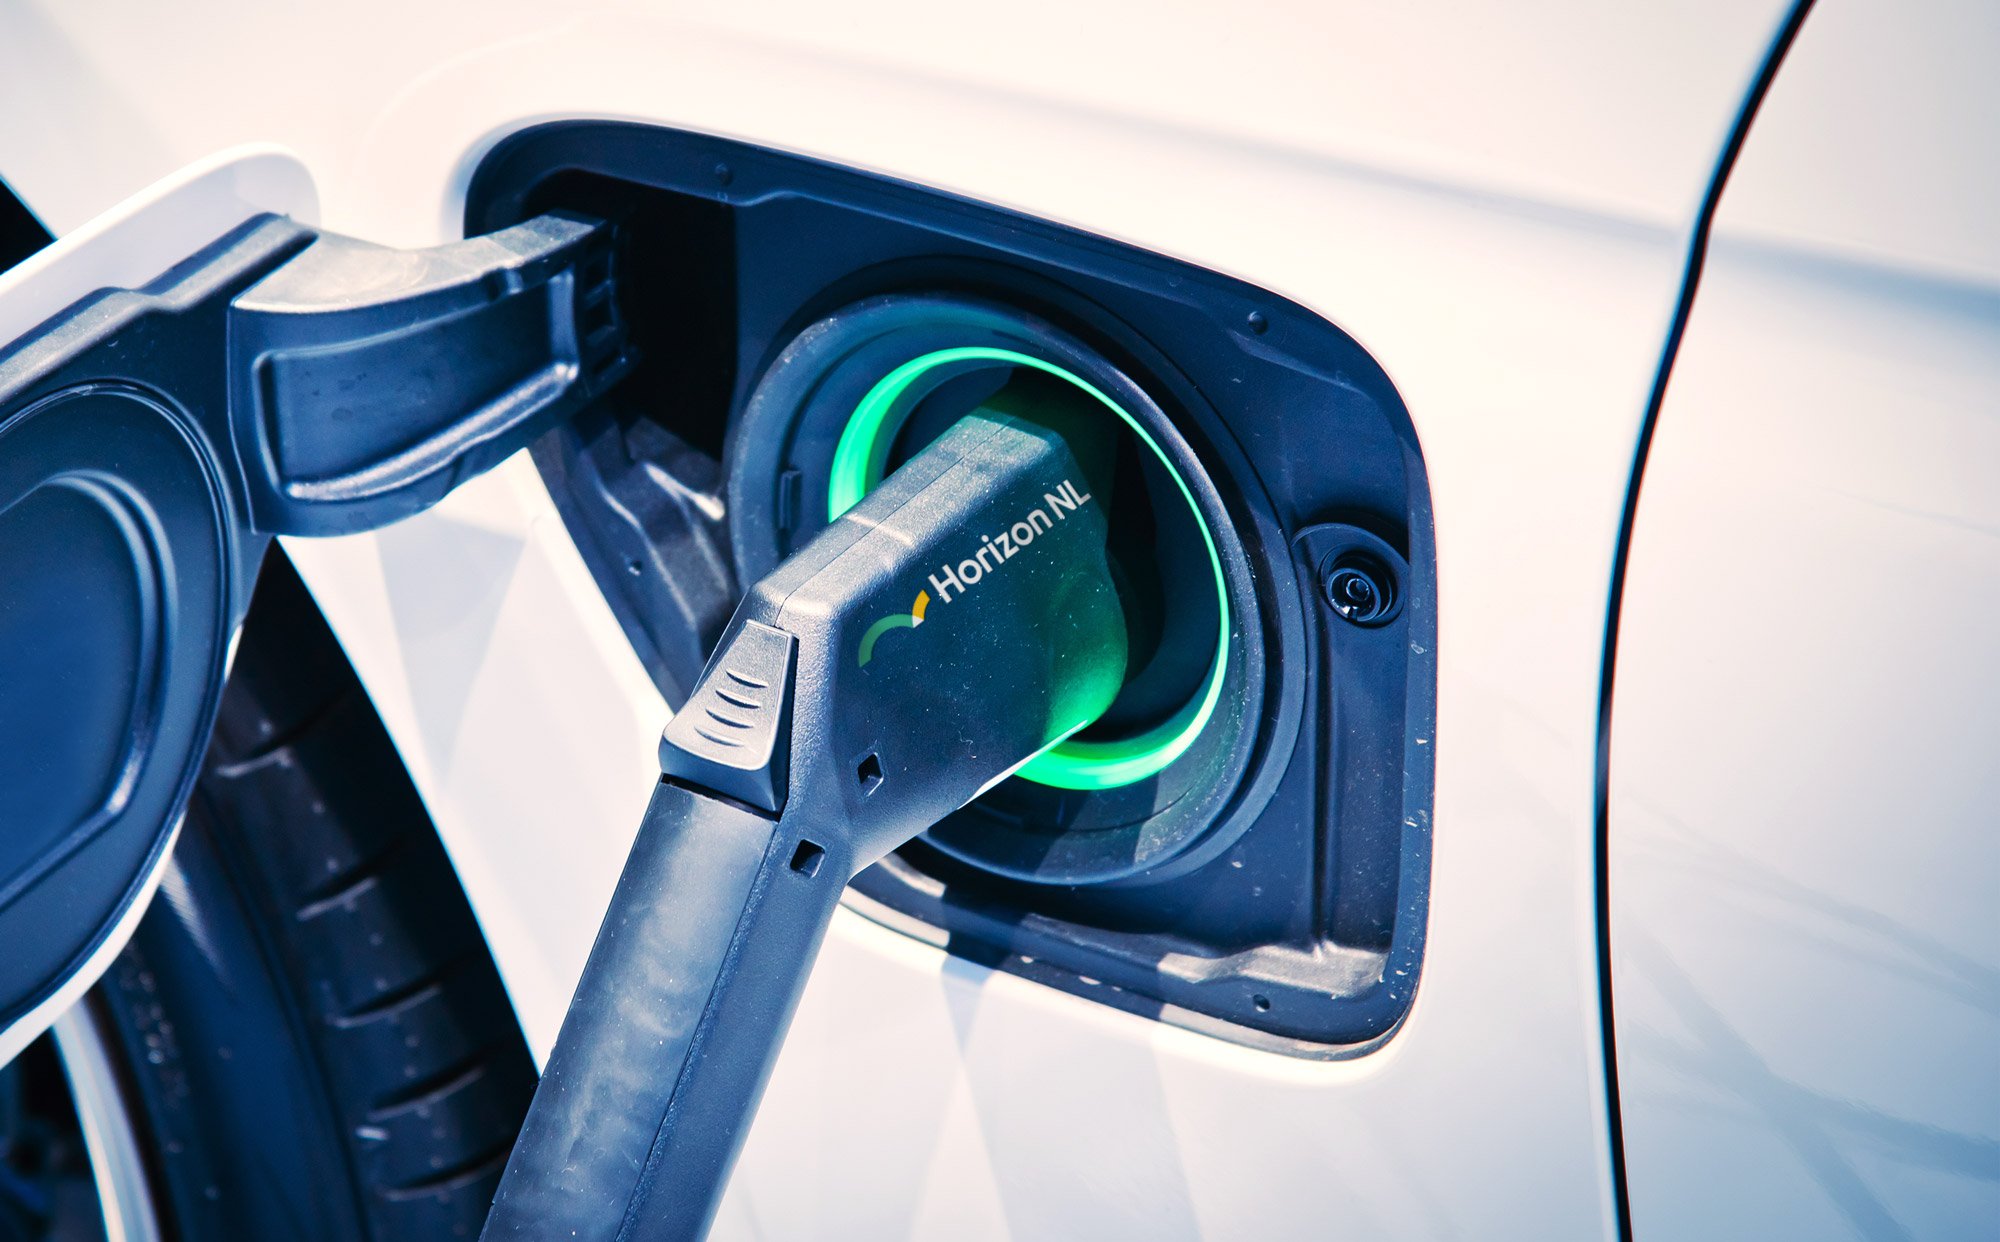 Horizon NL logo on electric car plug